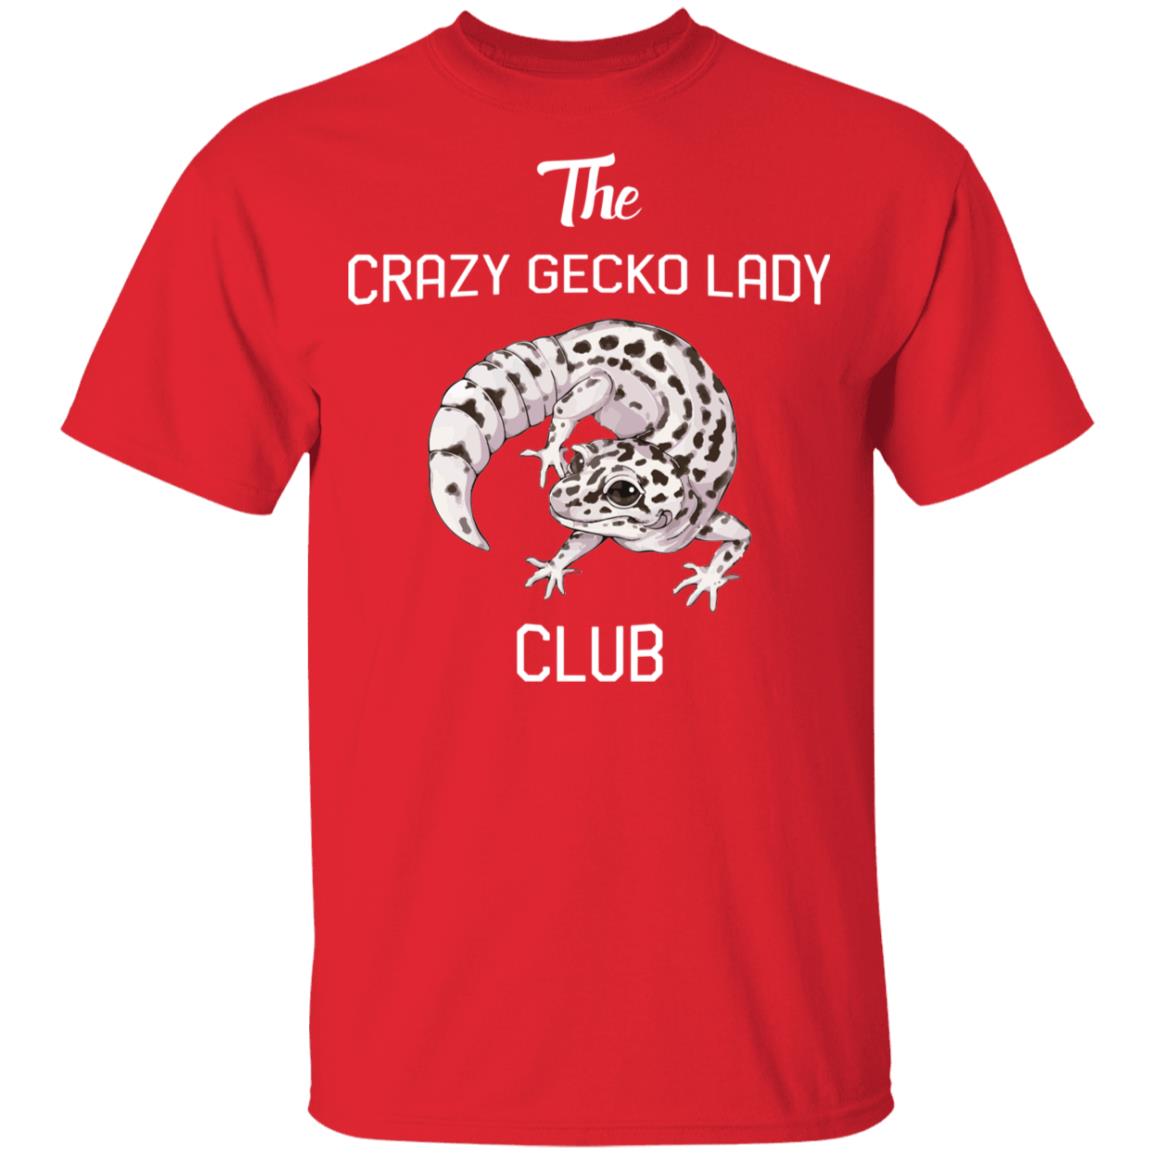 The Crazy Gecko Lady Club - Youth T-Shirt